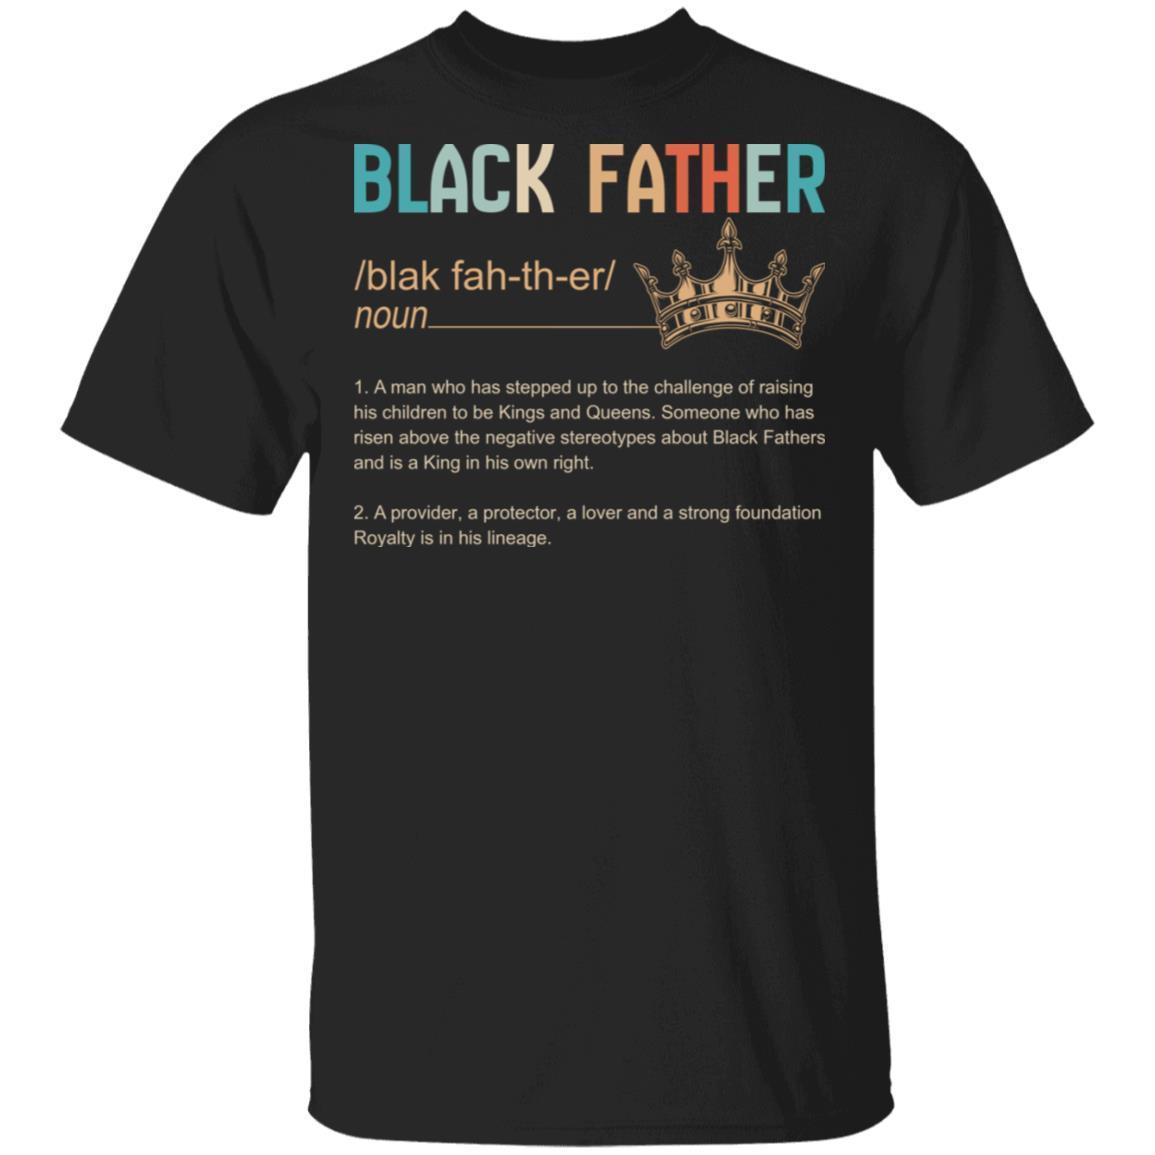 Black Father T-shirt Apparel CustomCat Unisex Tee Black S